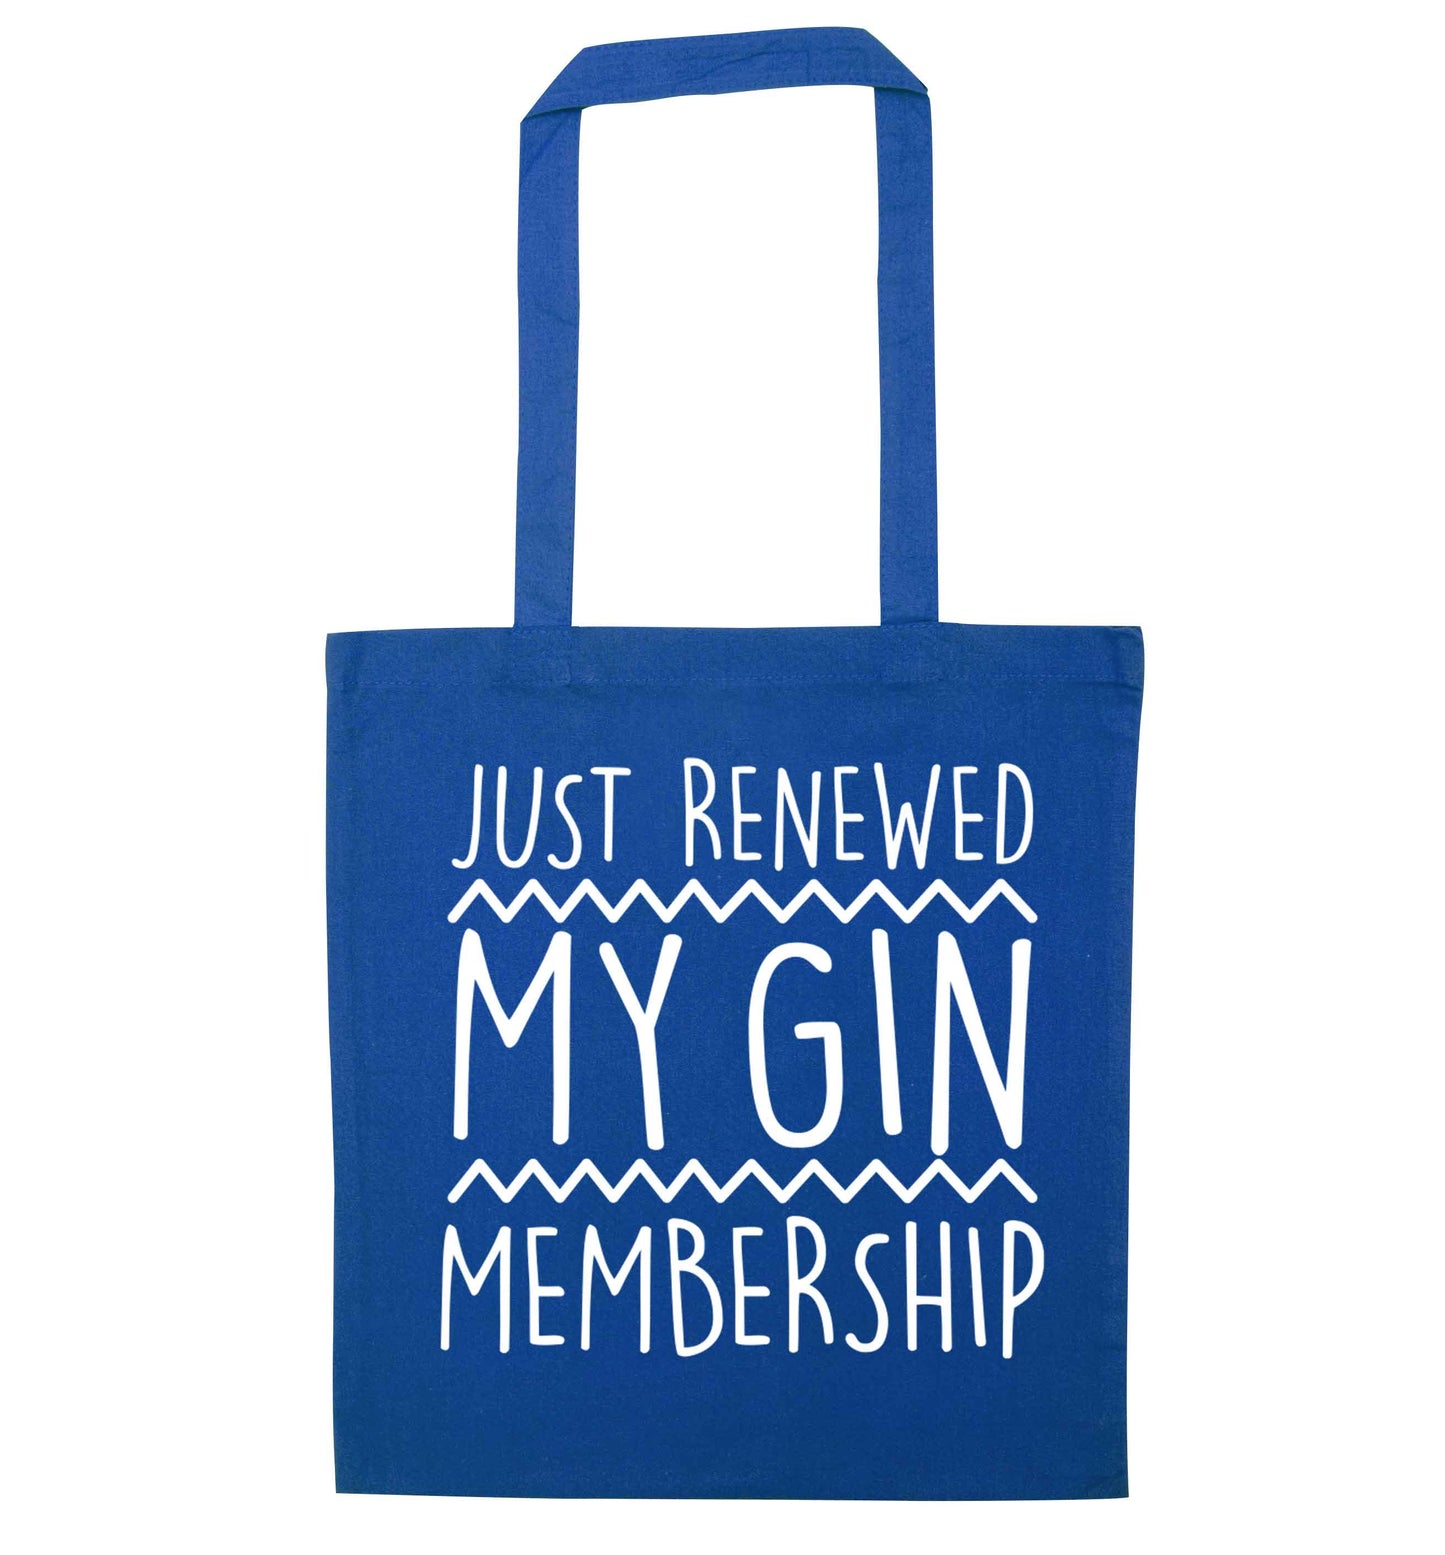 Just renewed my gin membership blue tote bag